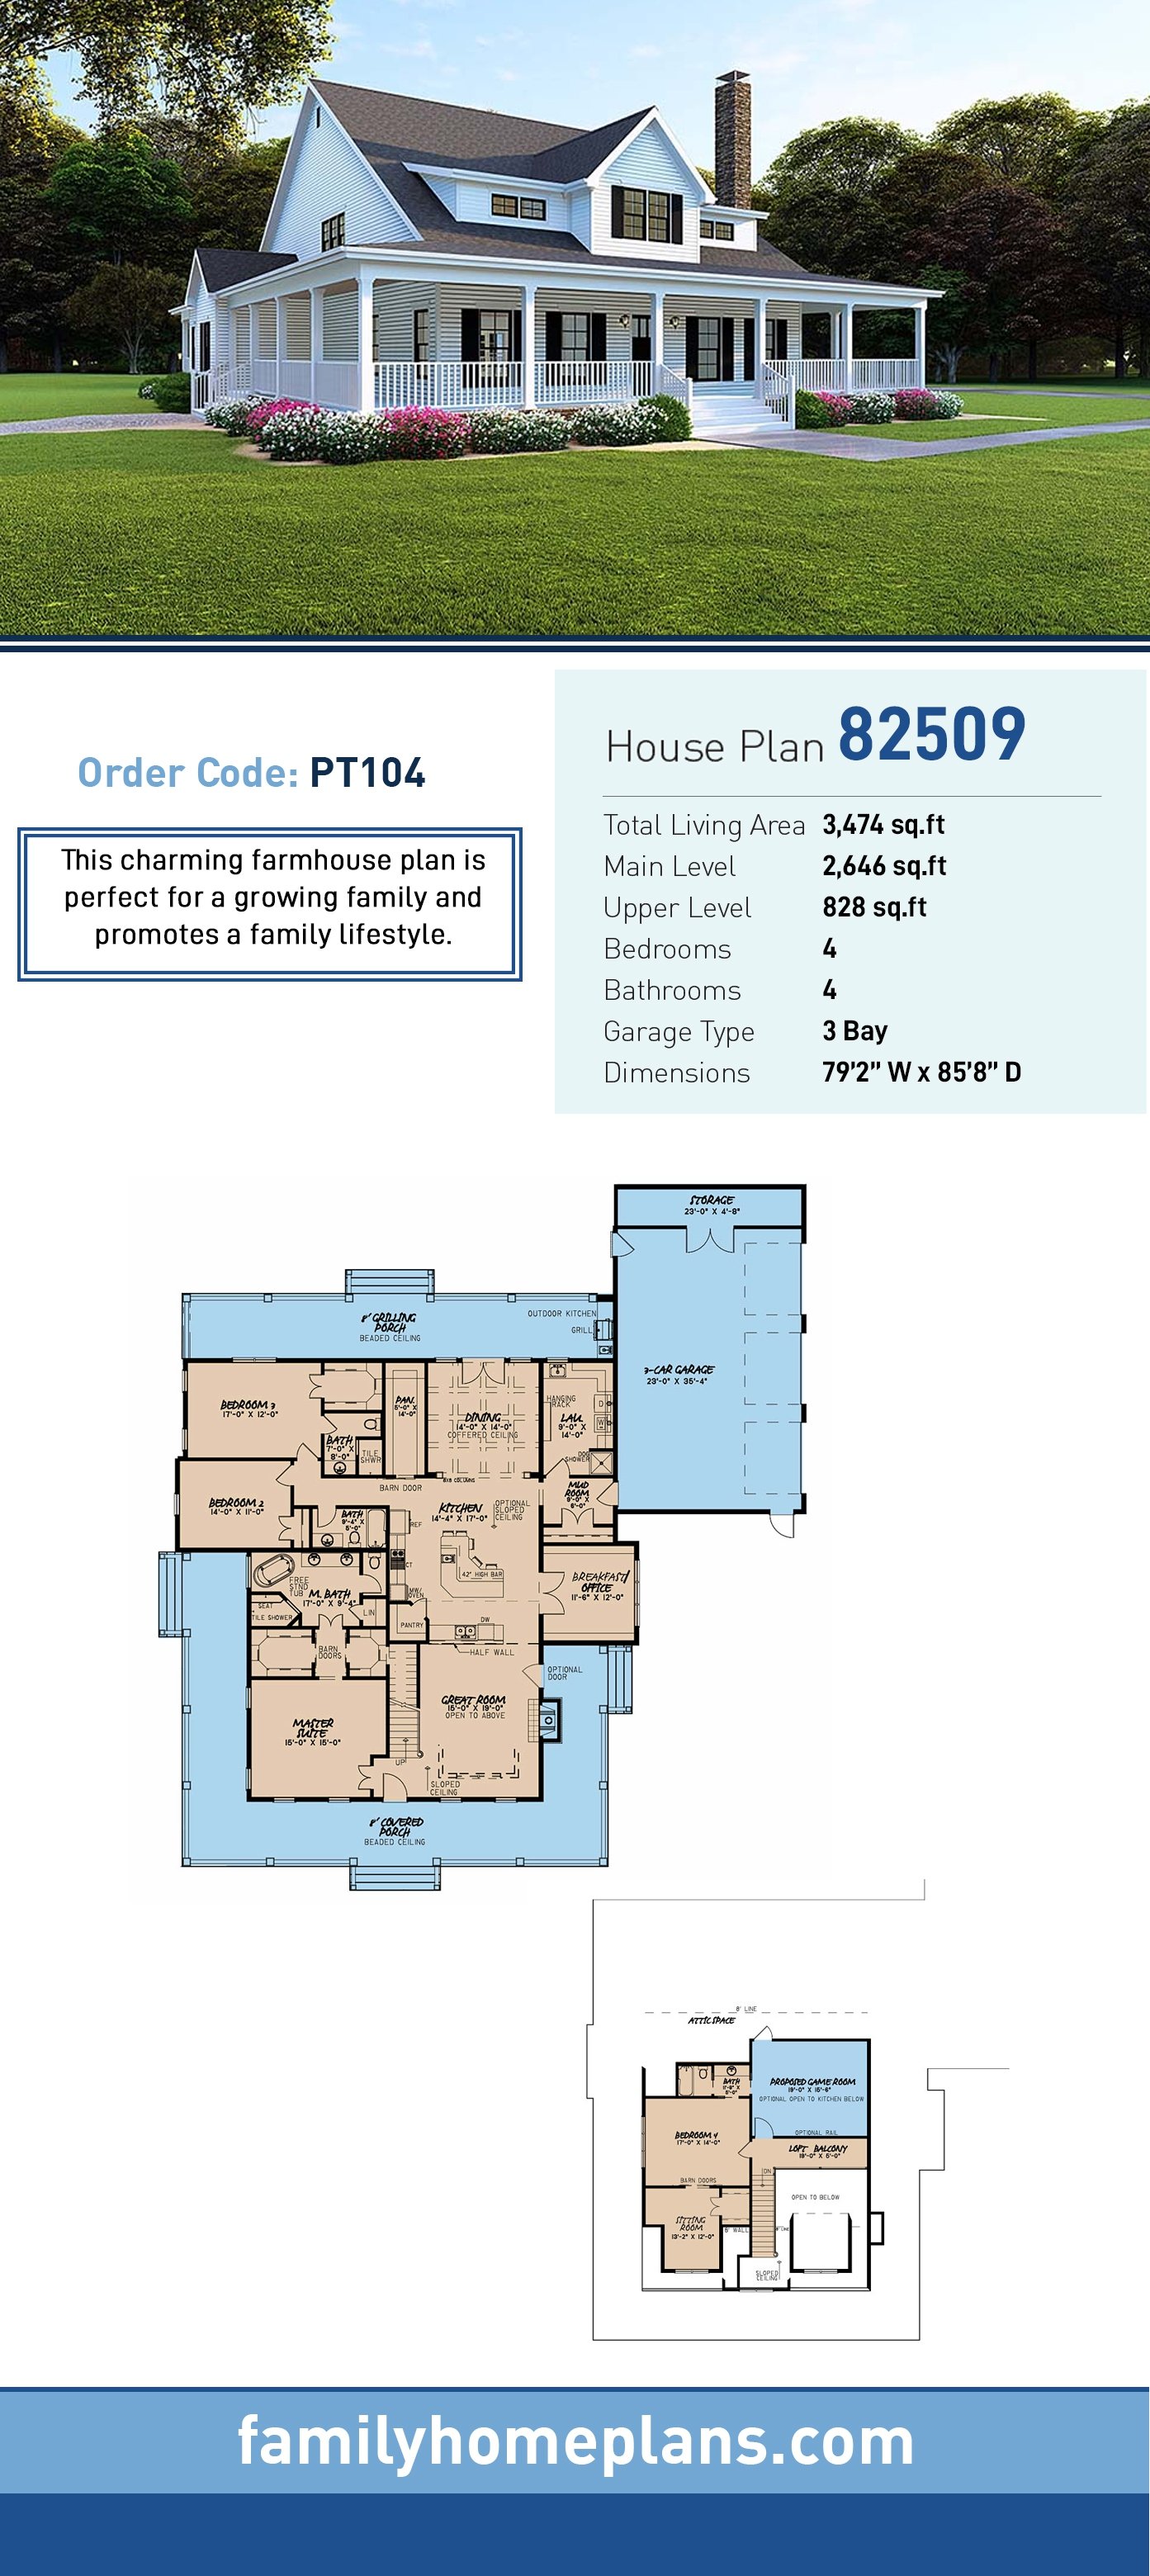 House Plan 82509